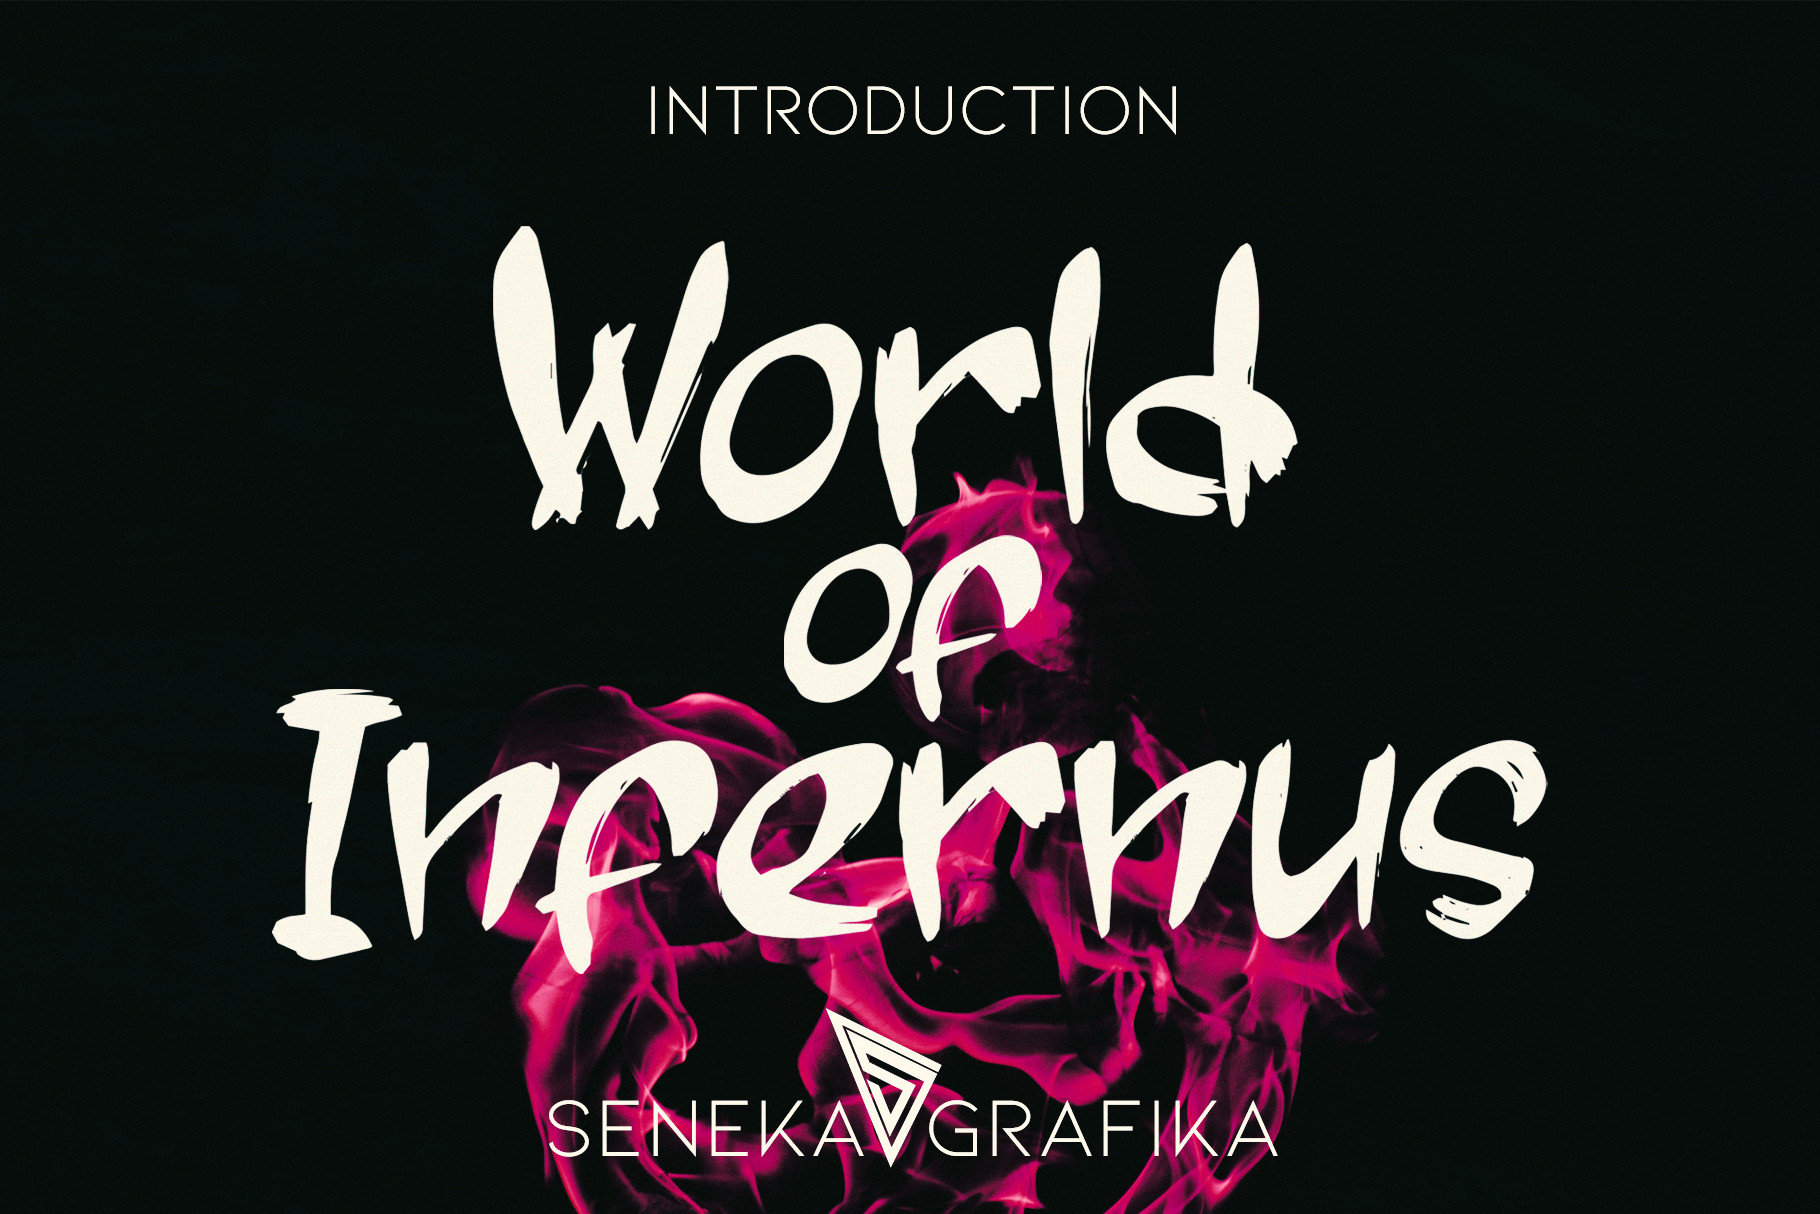 World of Infernus